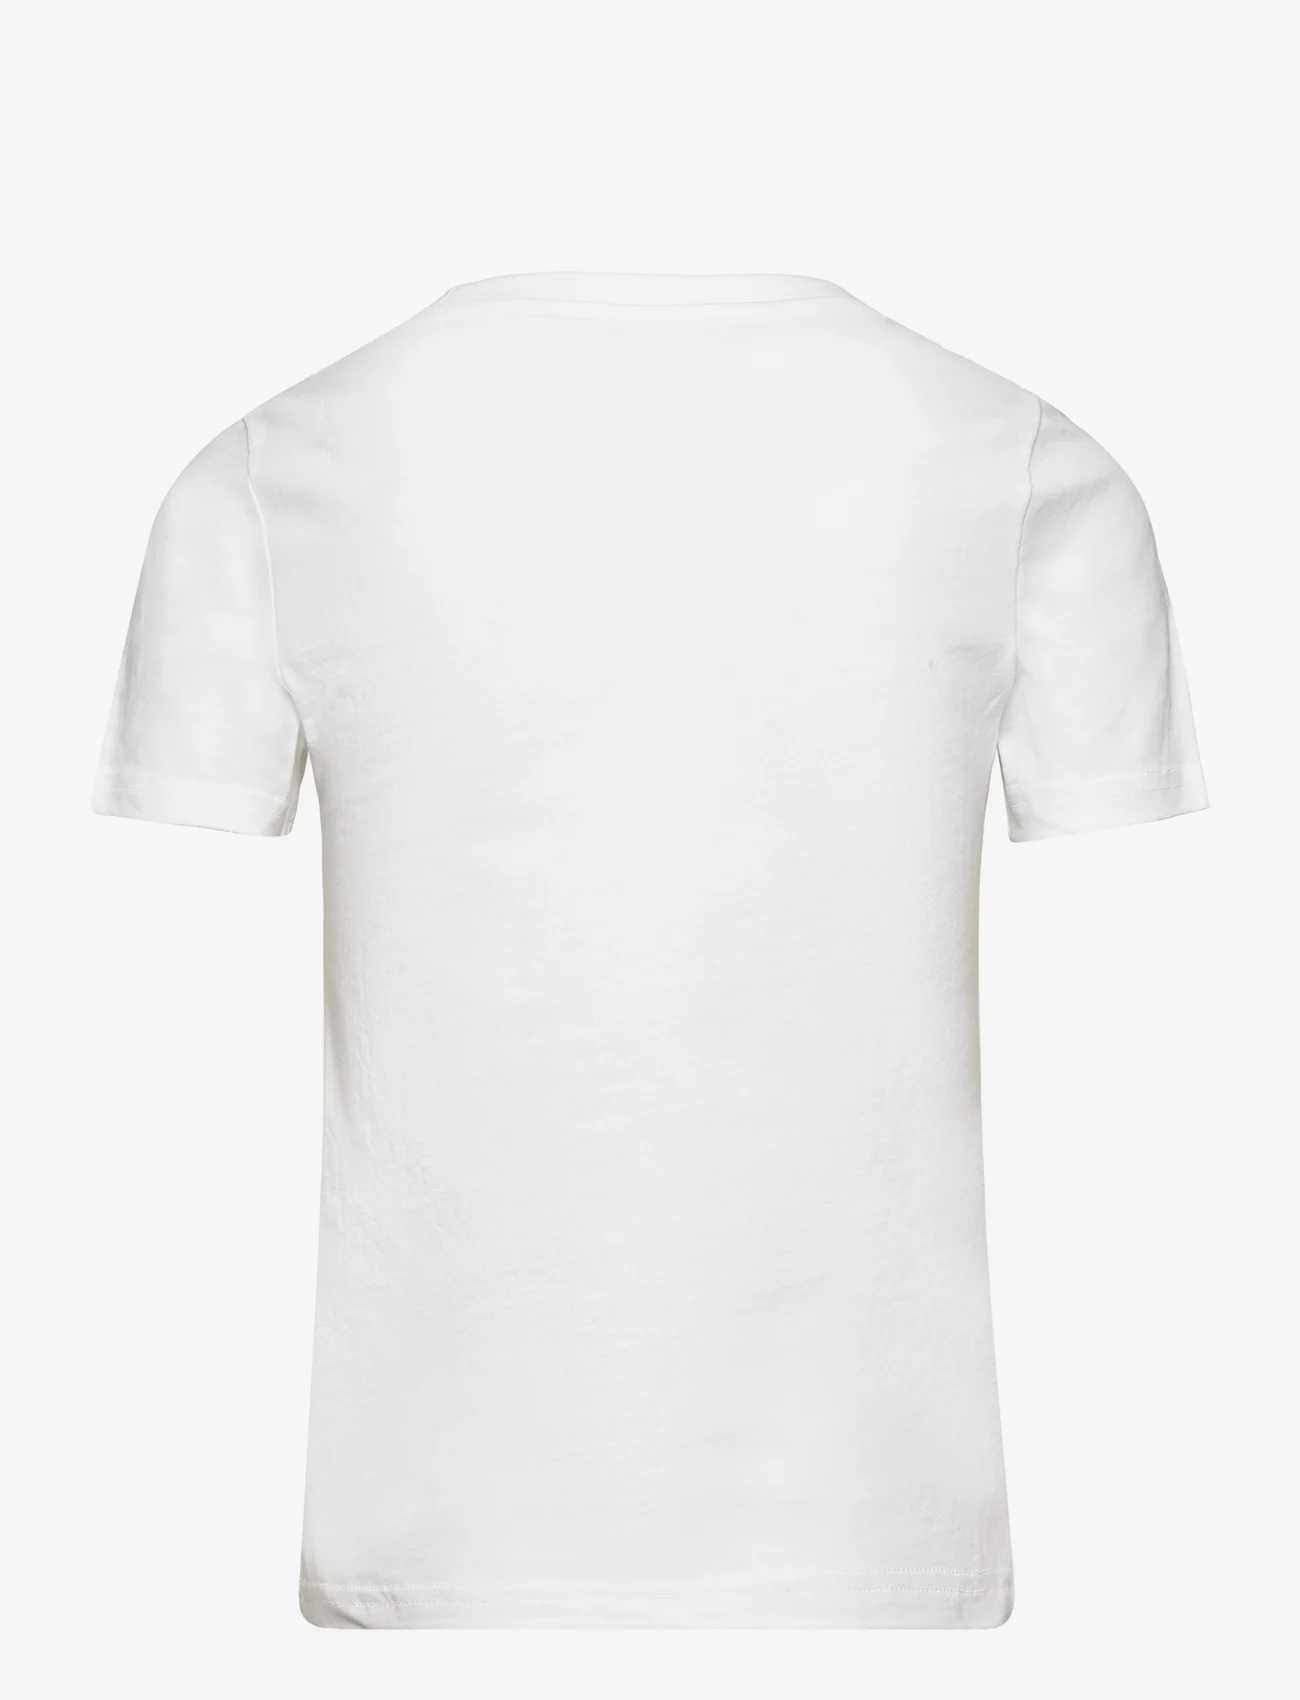 adidas Performance - GIRLS TRAIN TEE - kortærmede t-shirts - white - 1